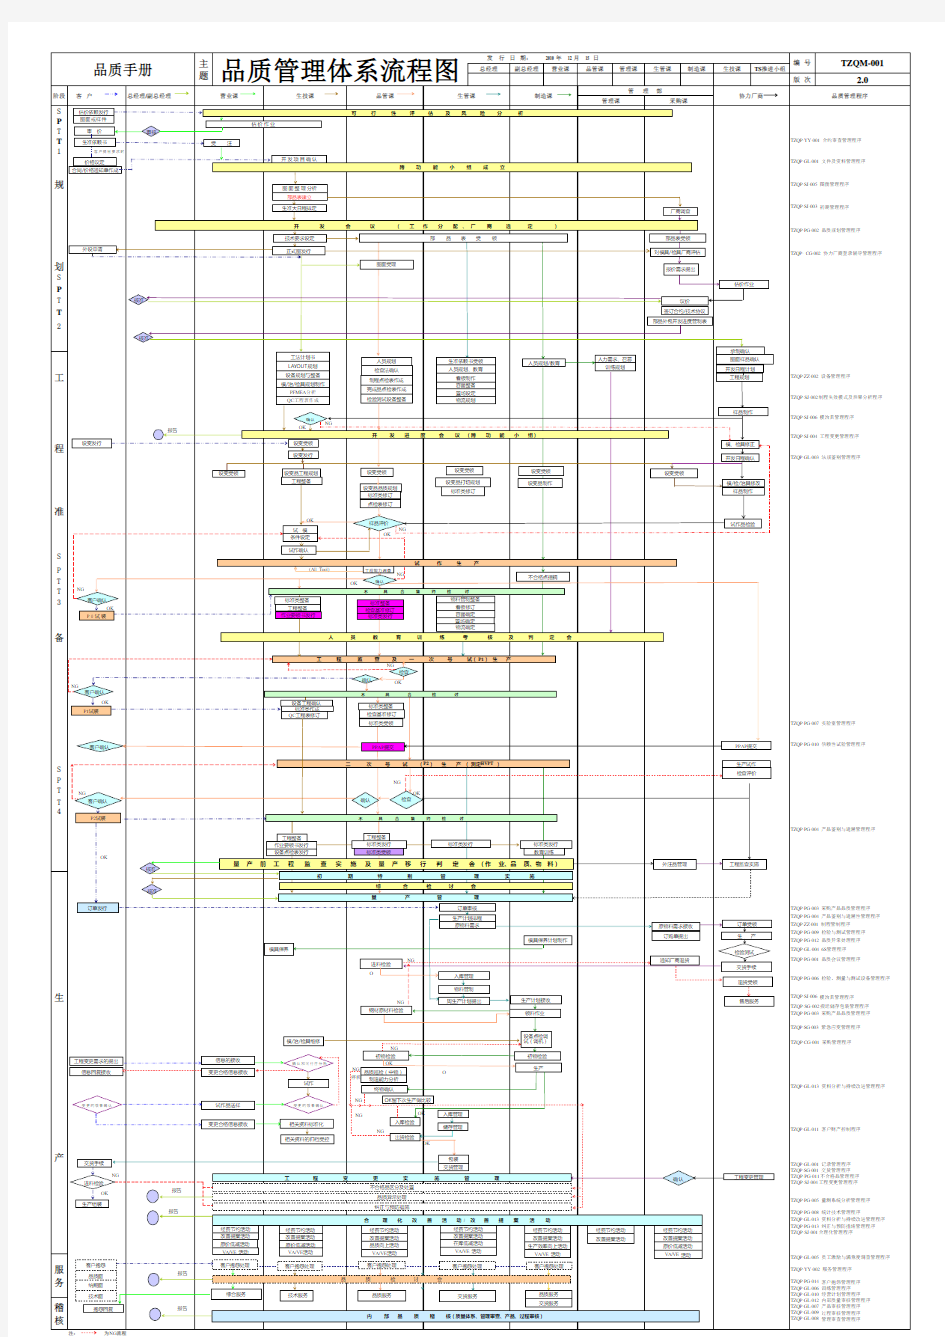 TS16949品质管理体系流程图